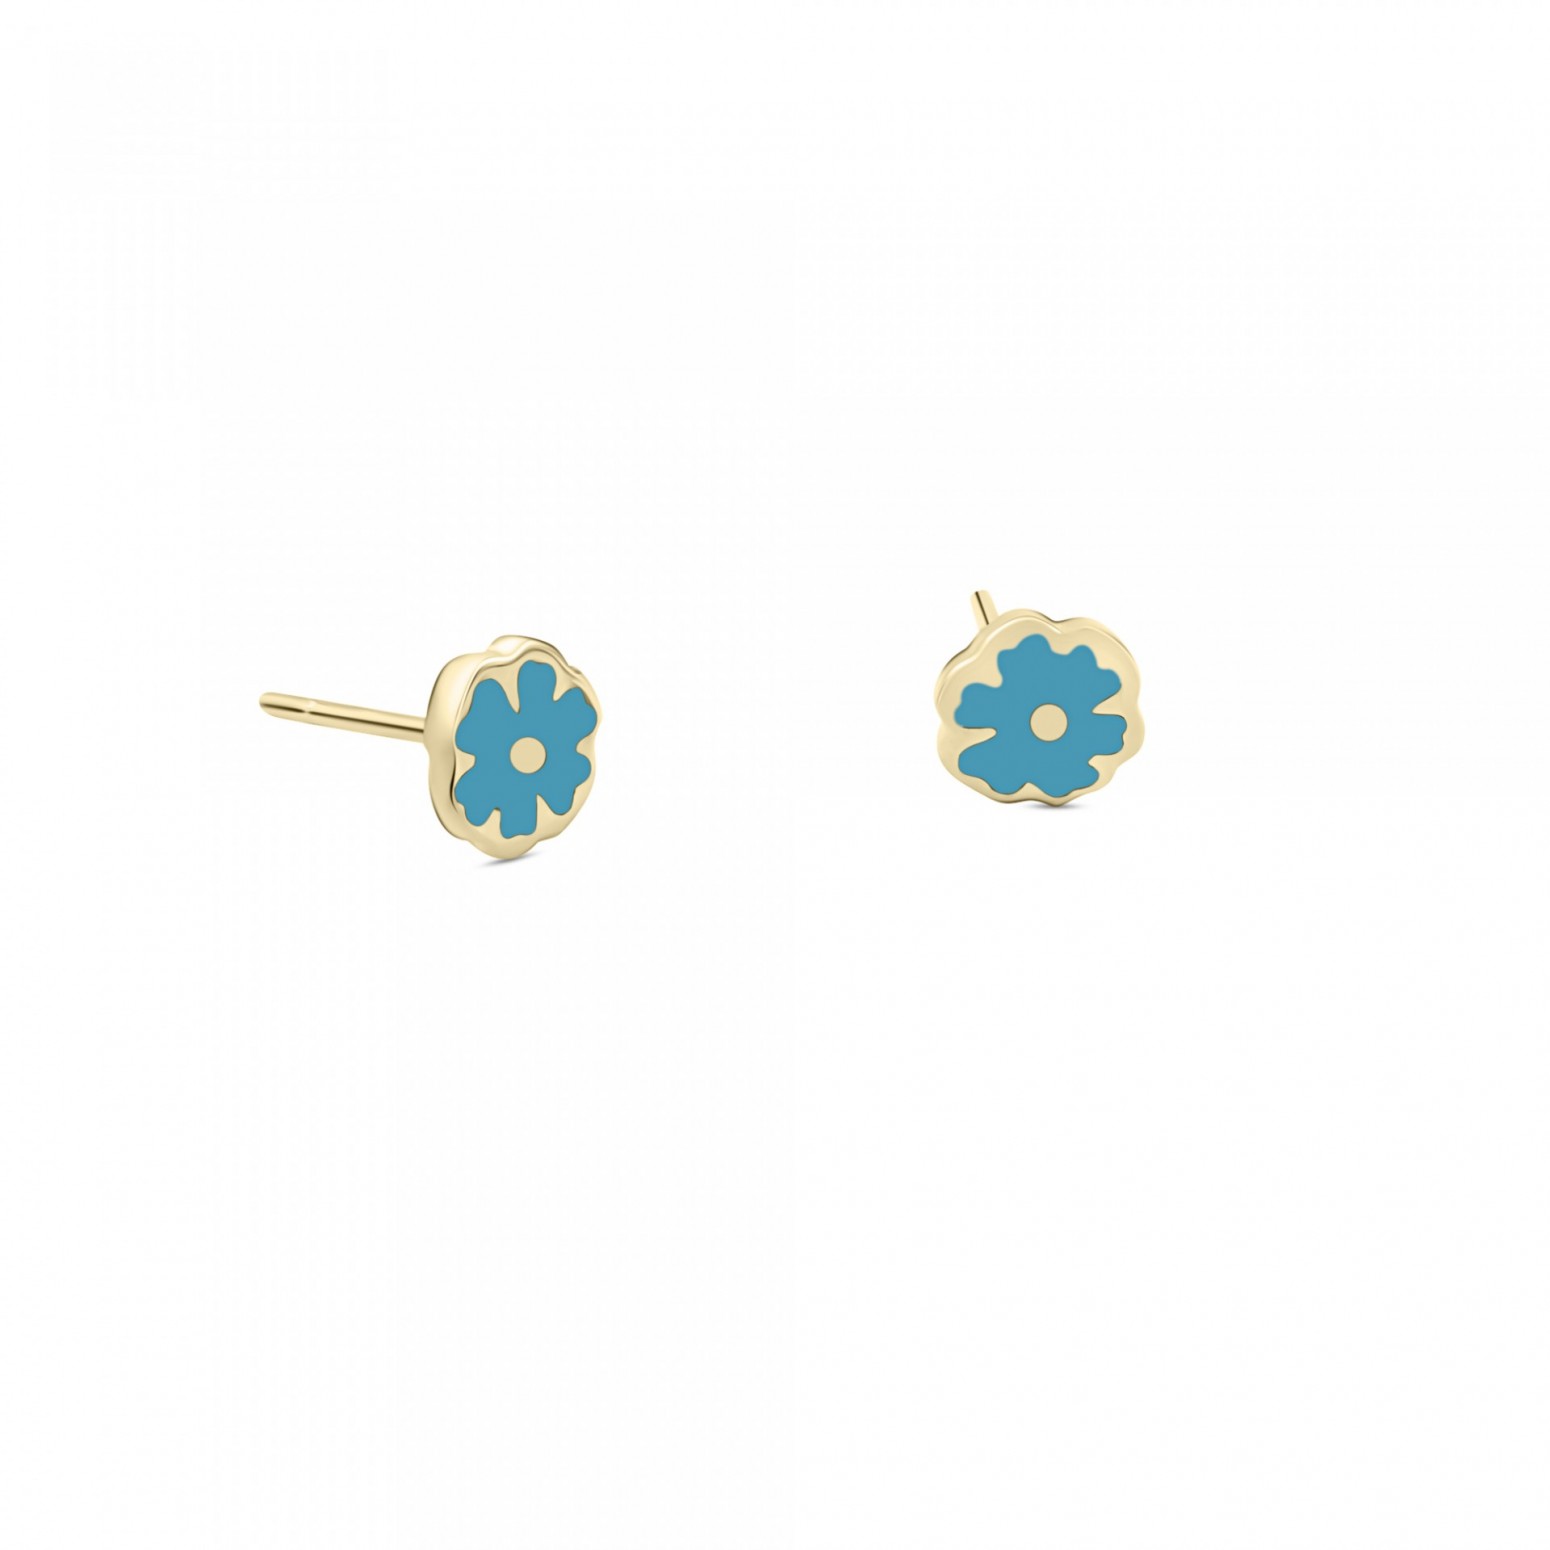 Flower baby earrings K9 gold with enamel, ps0148 EARRINGS Κοσμηματα - chrilia.gr